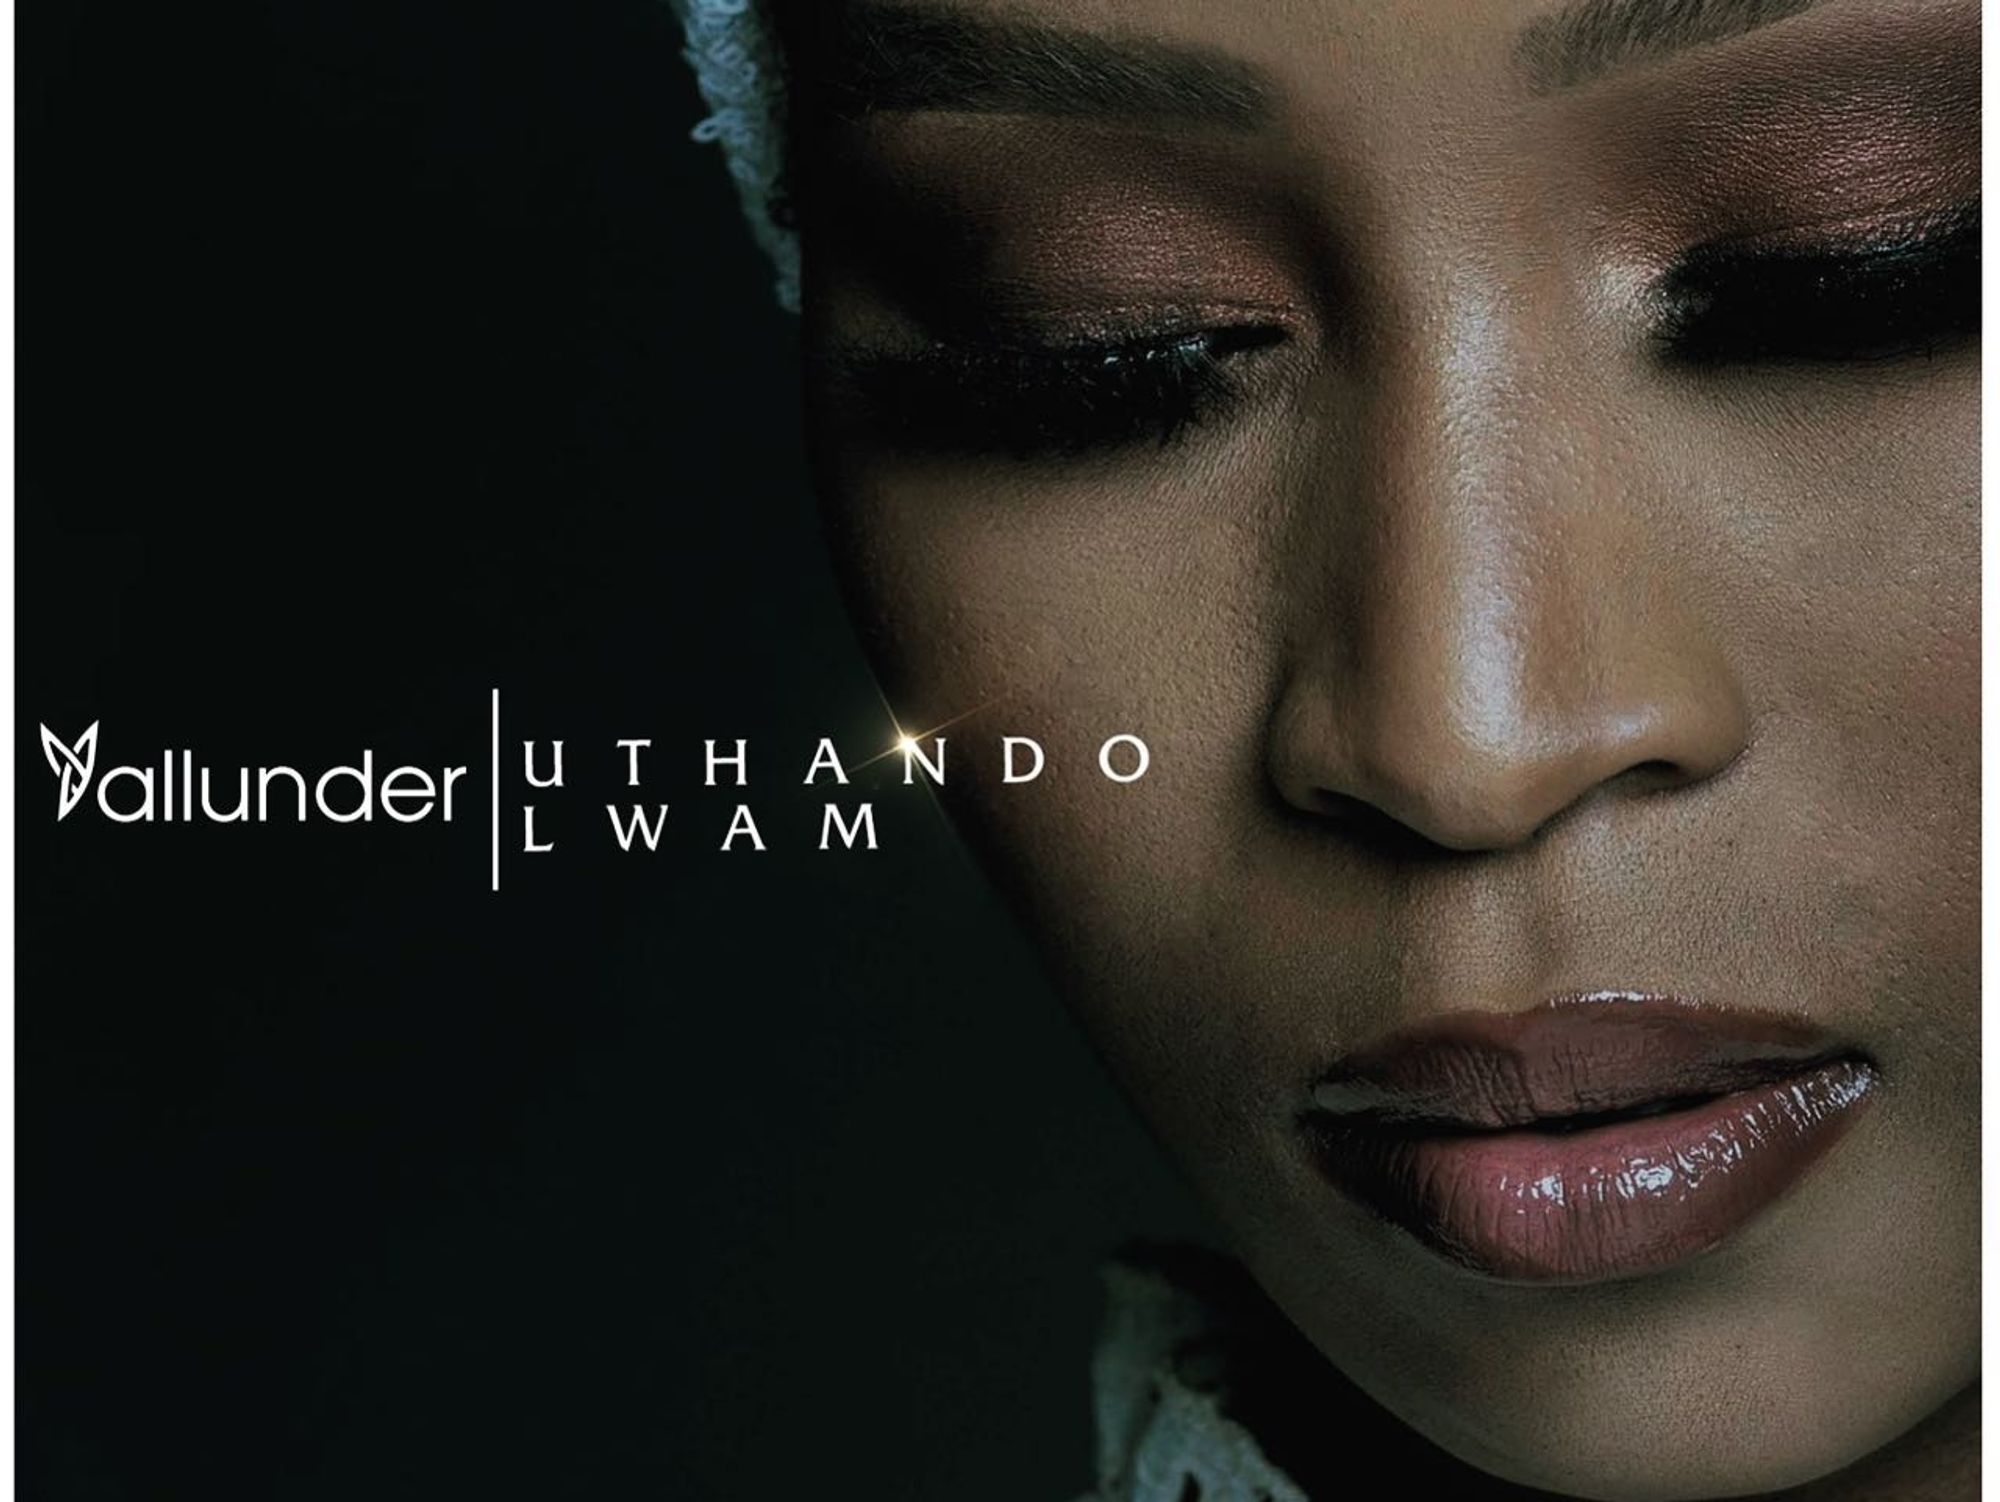 Listen To Yallunder’s Debut EP ‘Uthando Lwam’